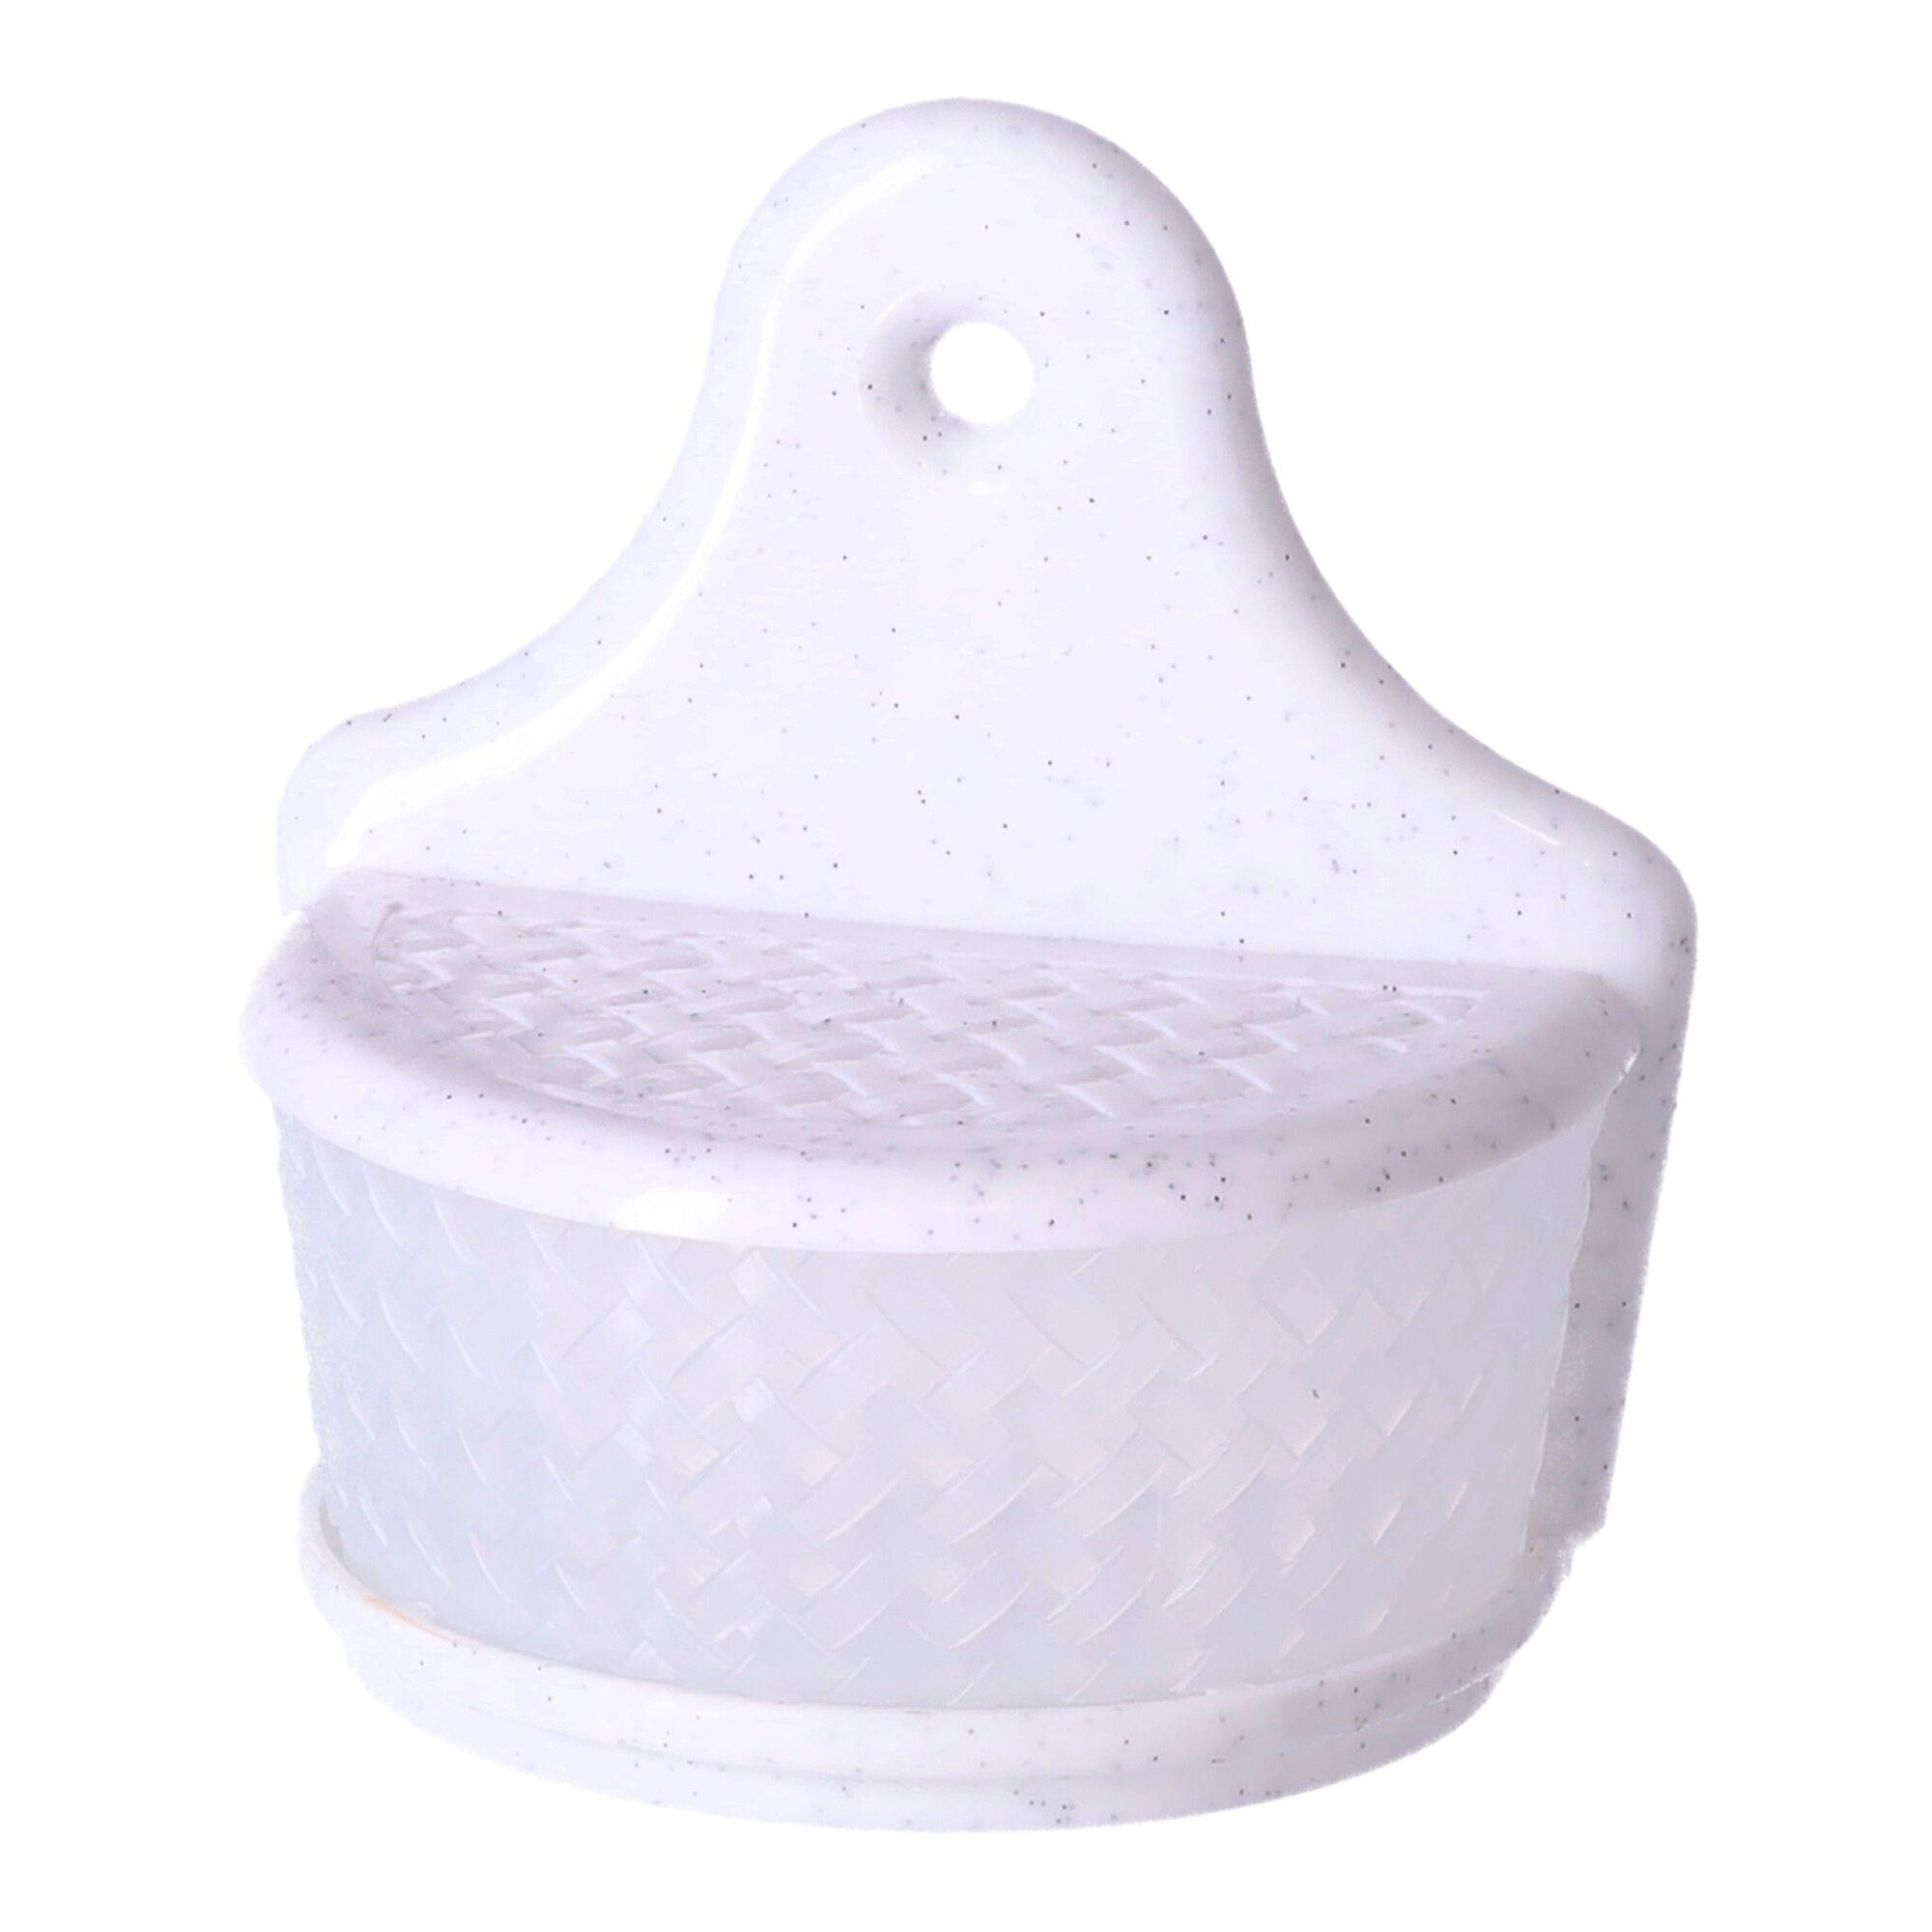 Wall plastic salt shaker - braided, POLISH PRODUCT